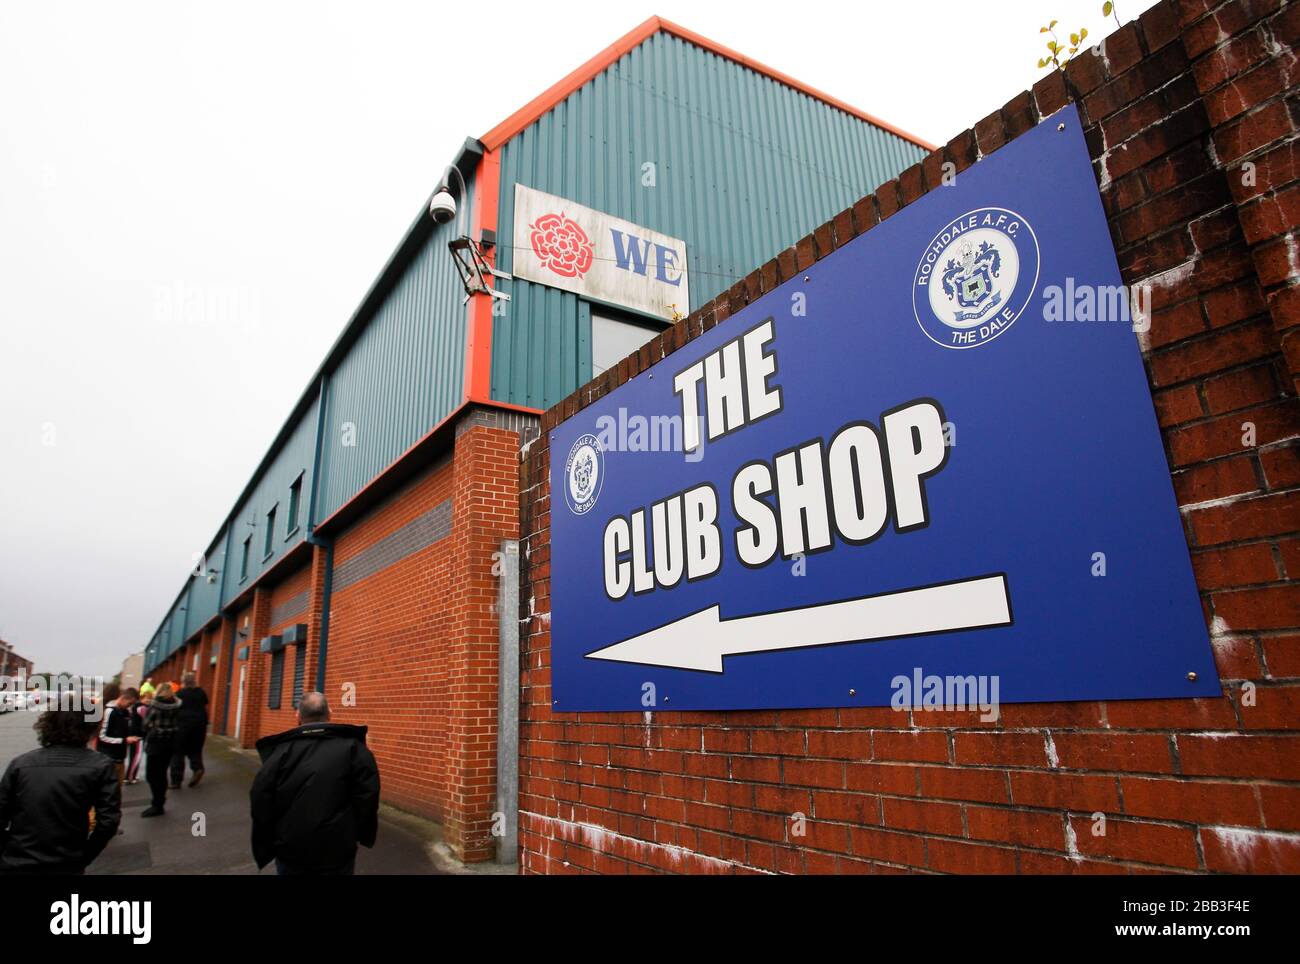 Club Shop Trick Or Treat This Week! - News - Rochdale AFC